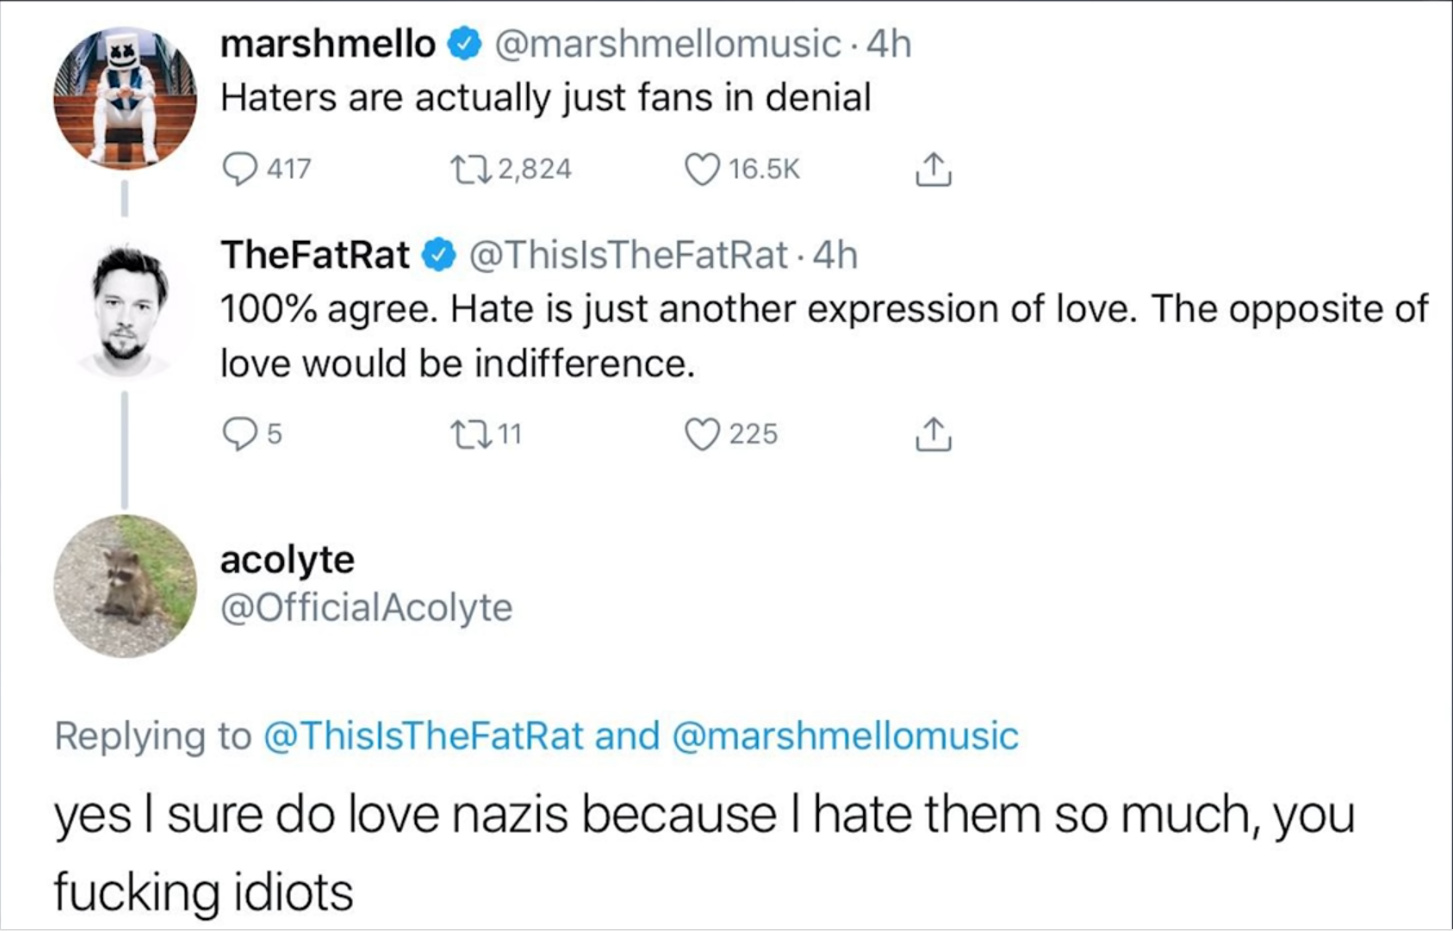 Everyone loves nazis - meme